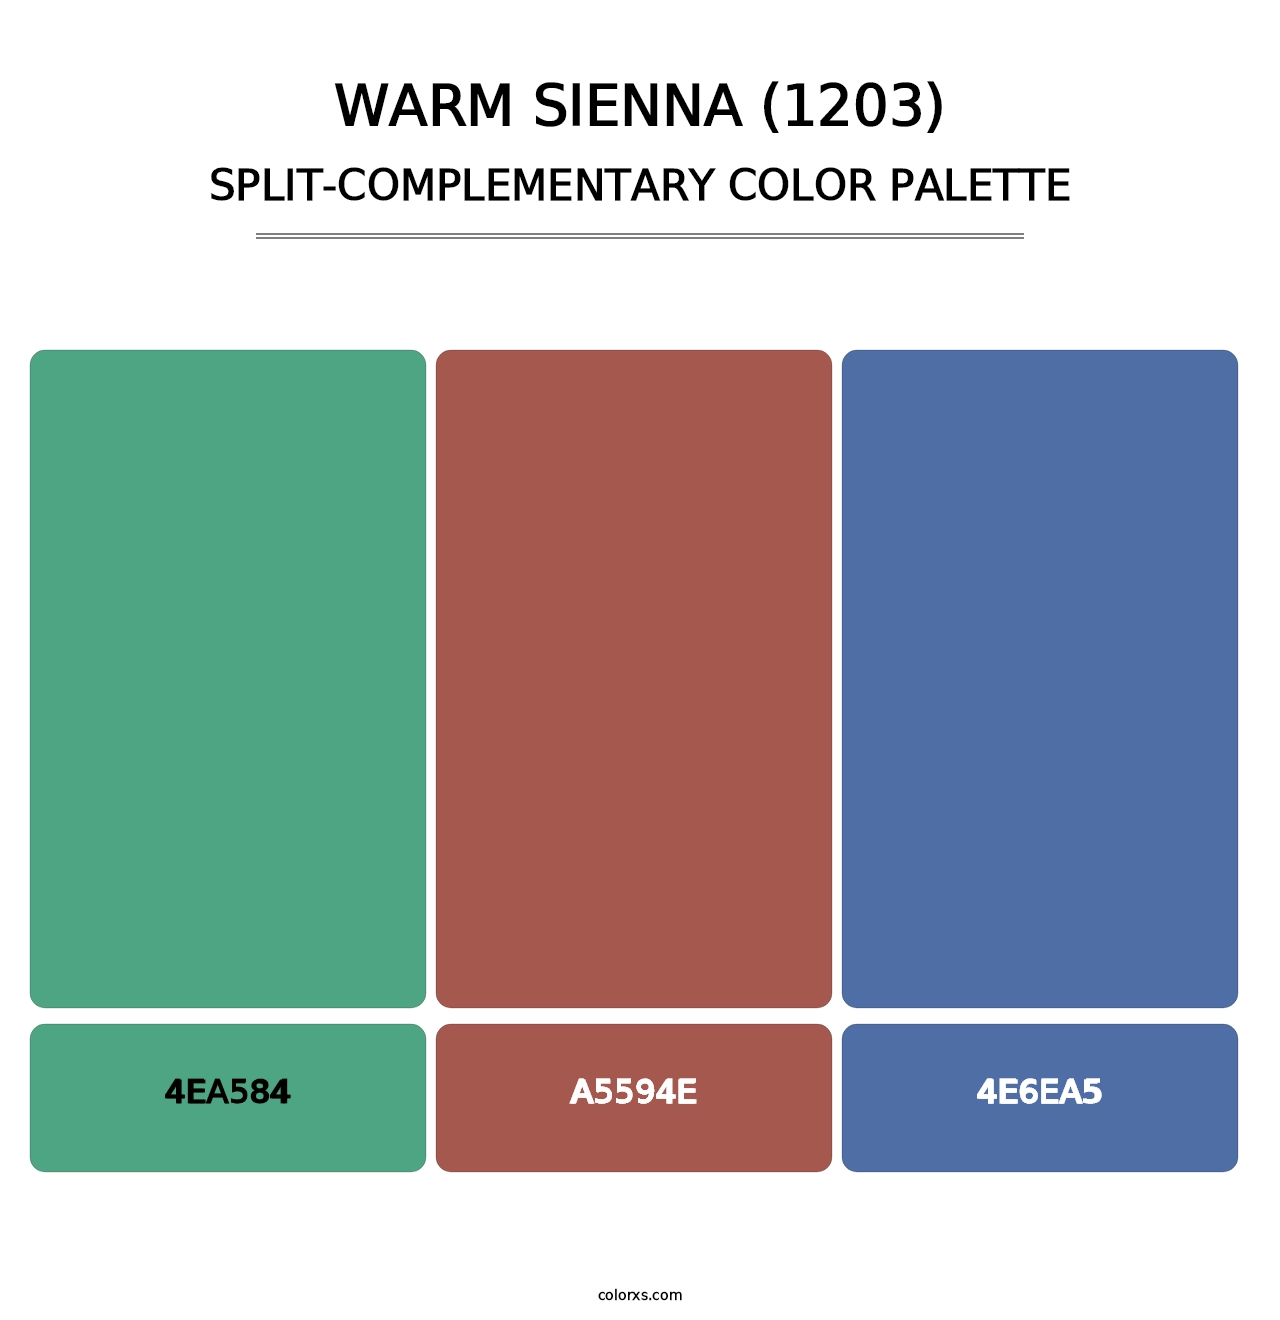 Warm Sienna (1203) - Split-Complementary Color Palette